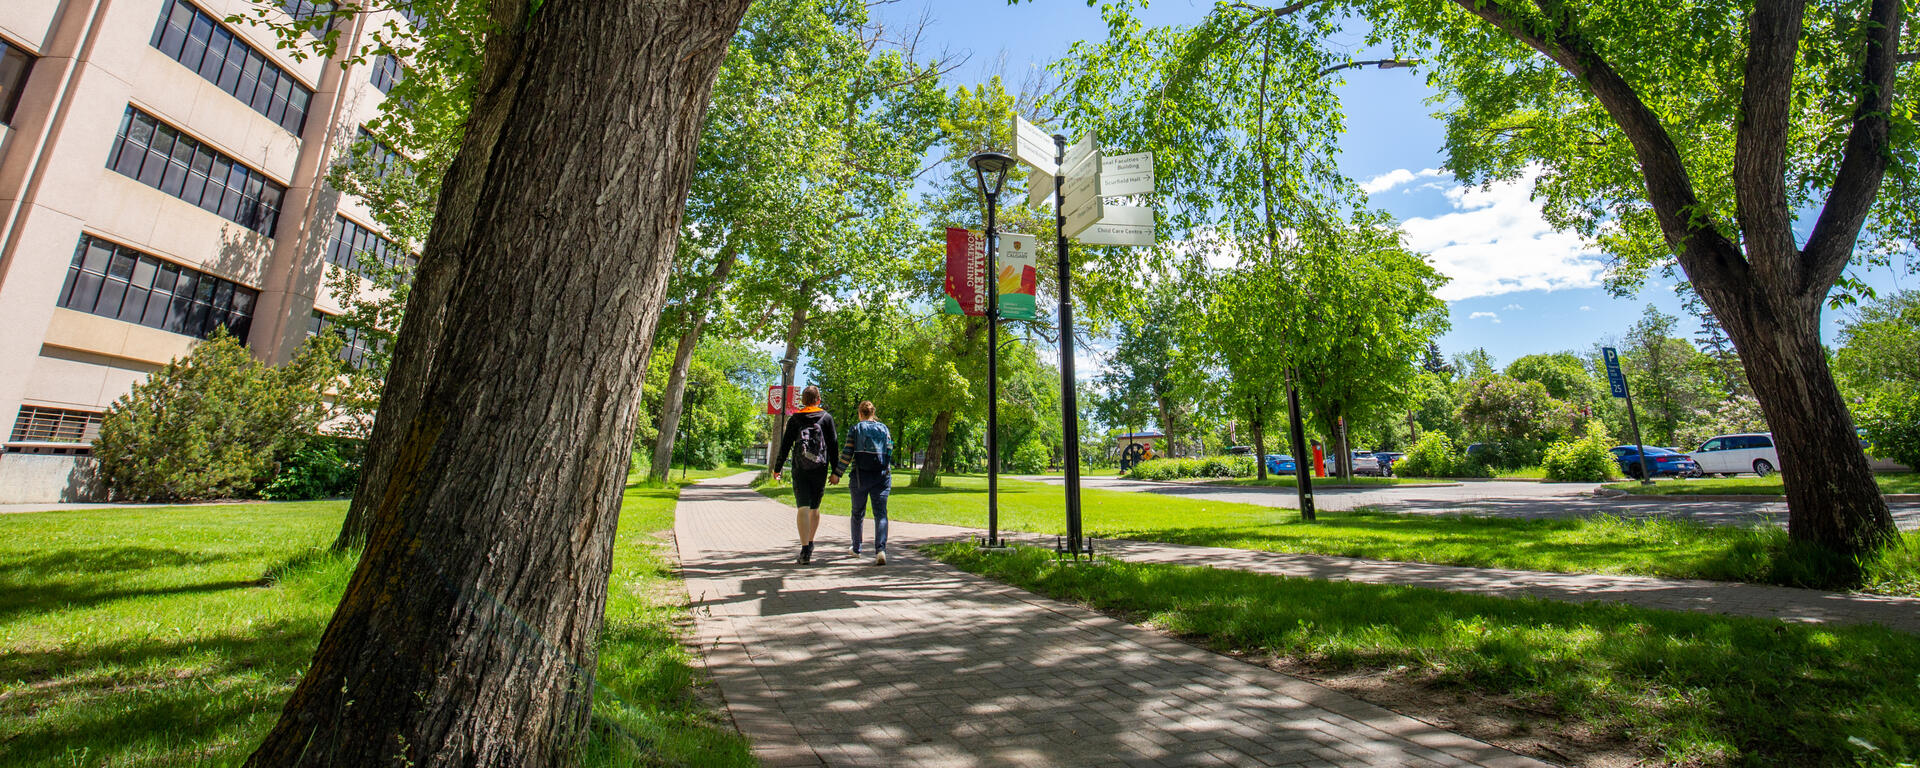 Students walk on a sidewalk on campus on a calm summer day